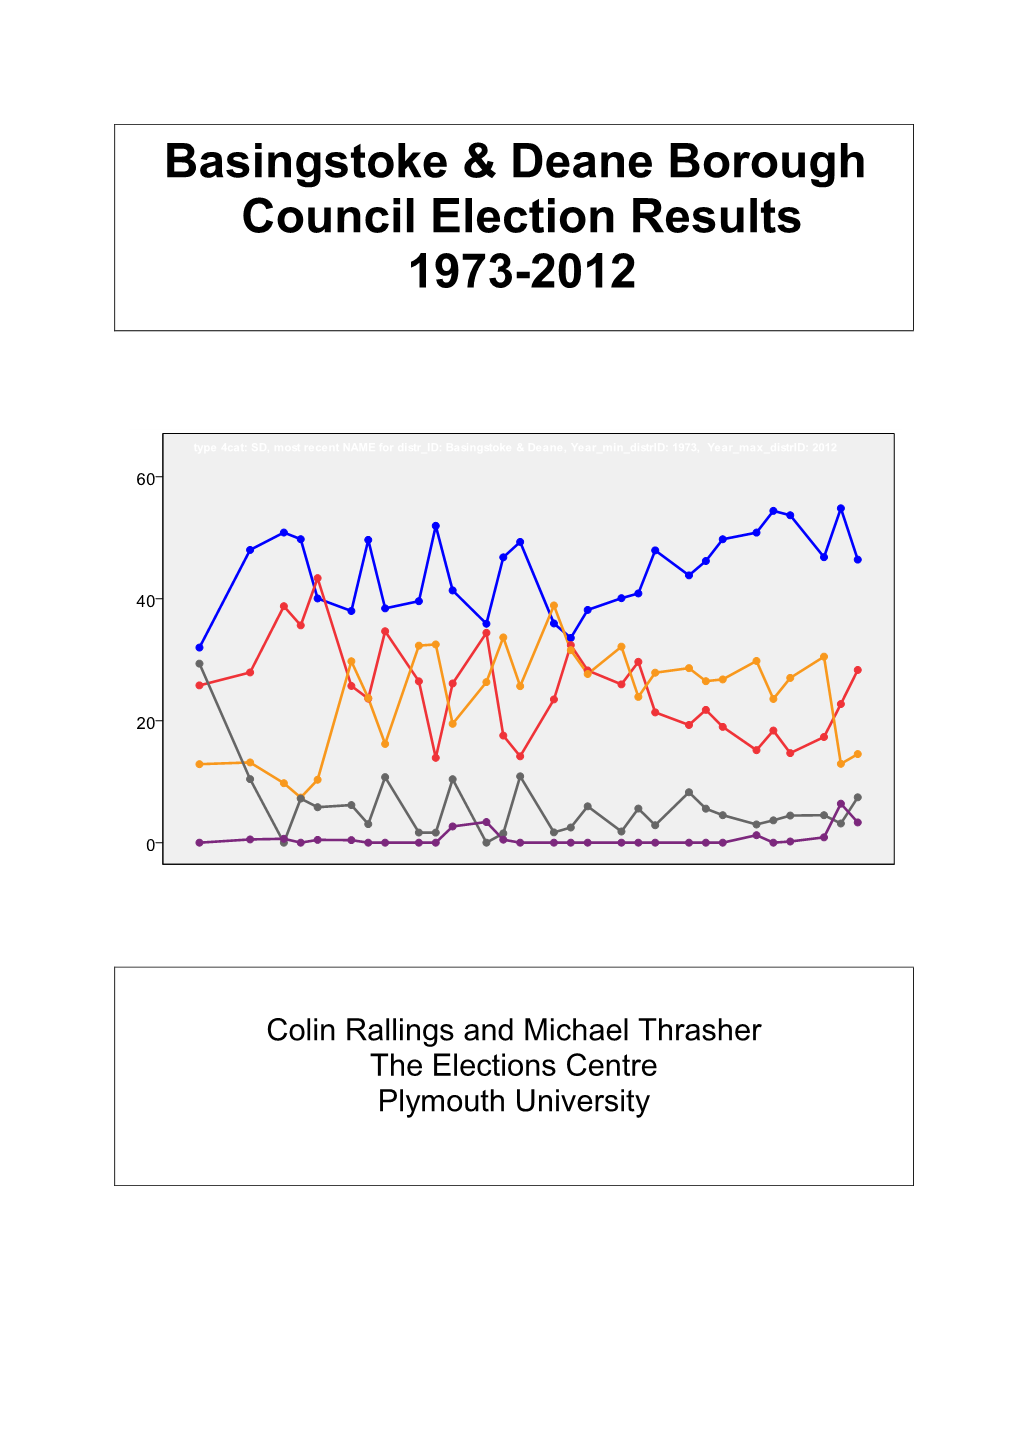 Basingstoke & Deane Borough Council Election Results 1973-2012